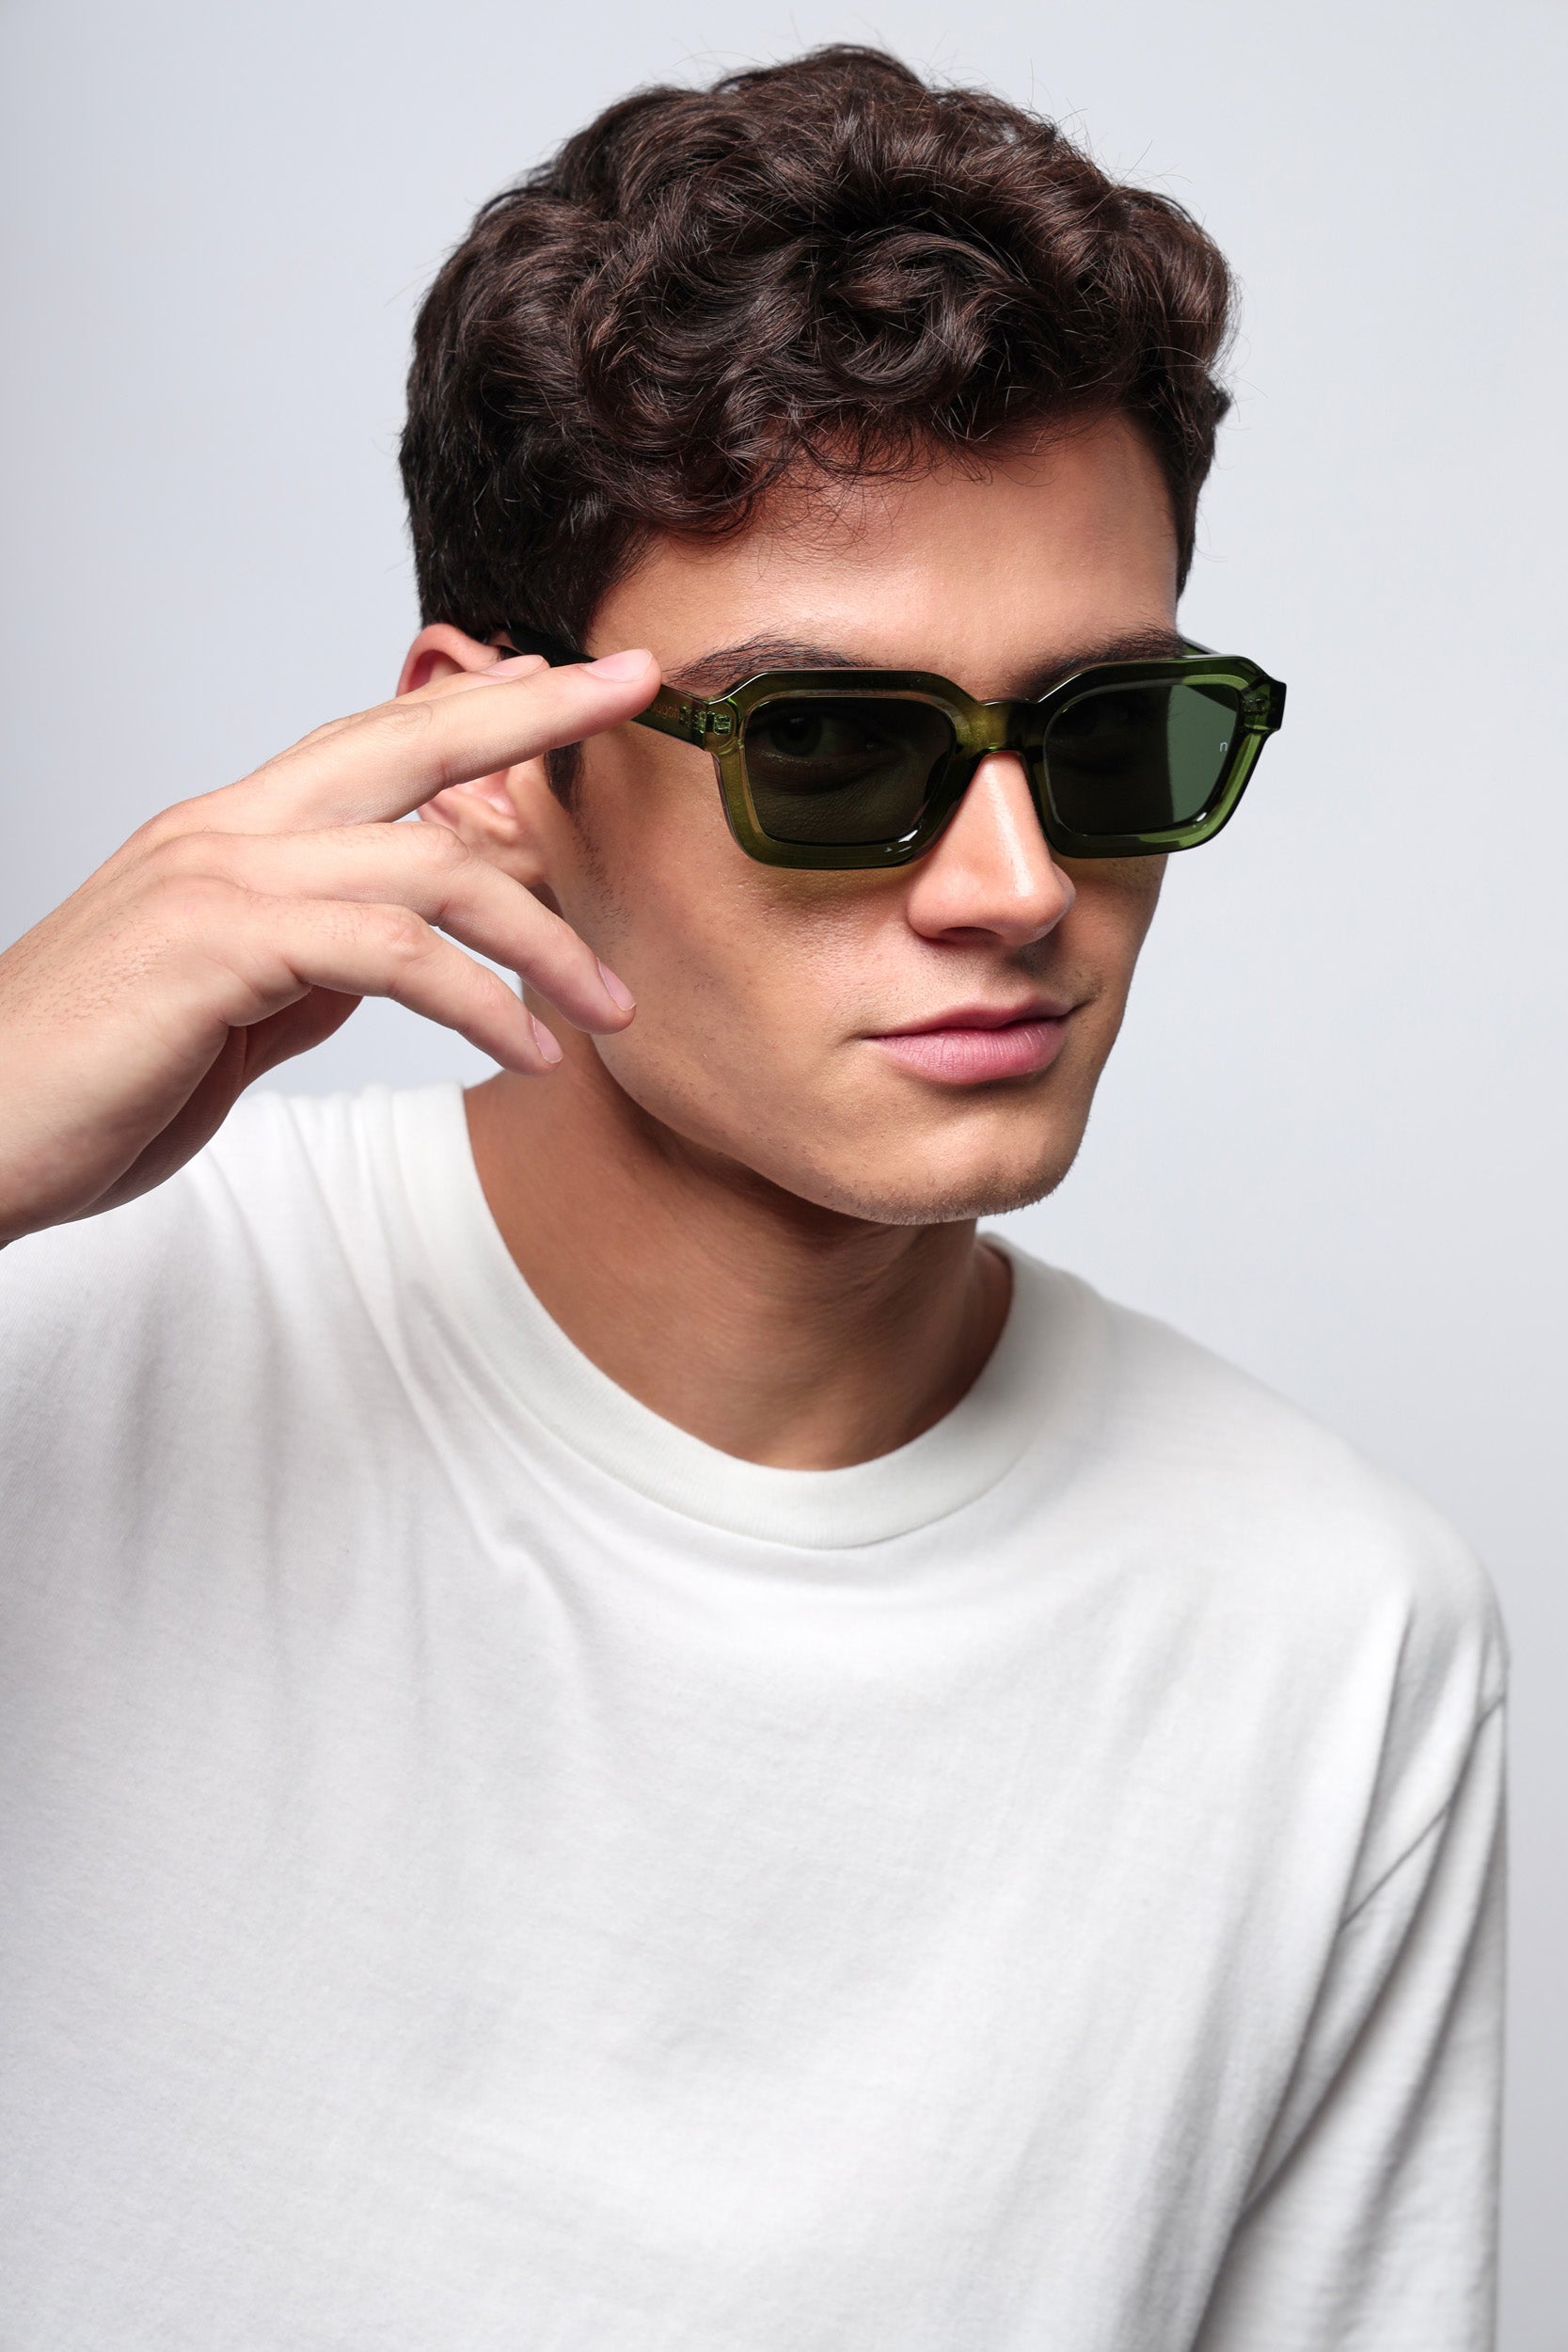 Aggregate more than 131 gucci mens wayfarer sunglasses super hot